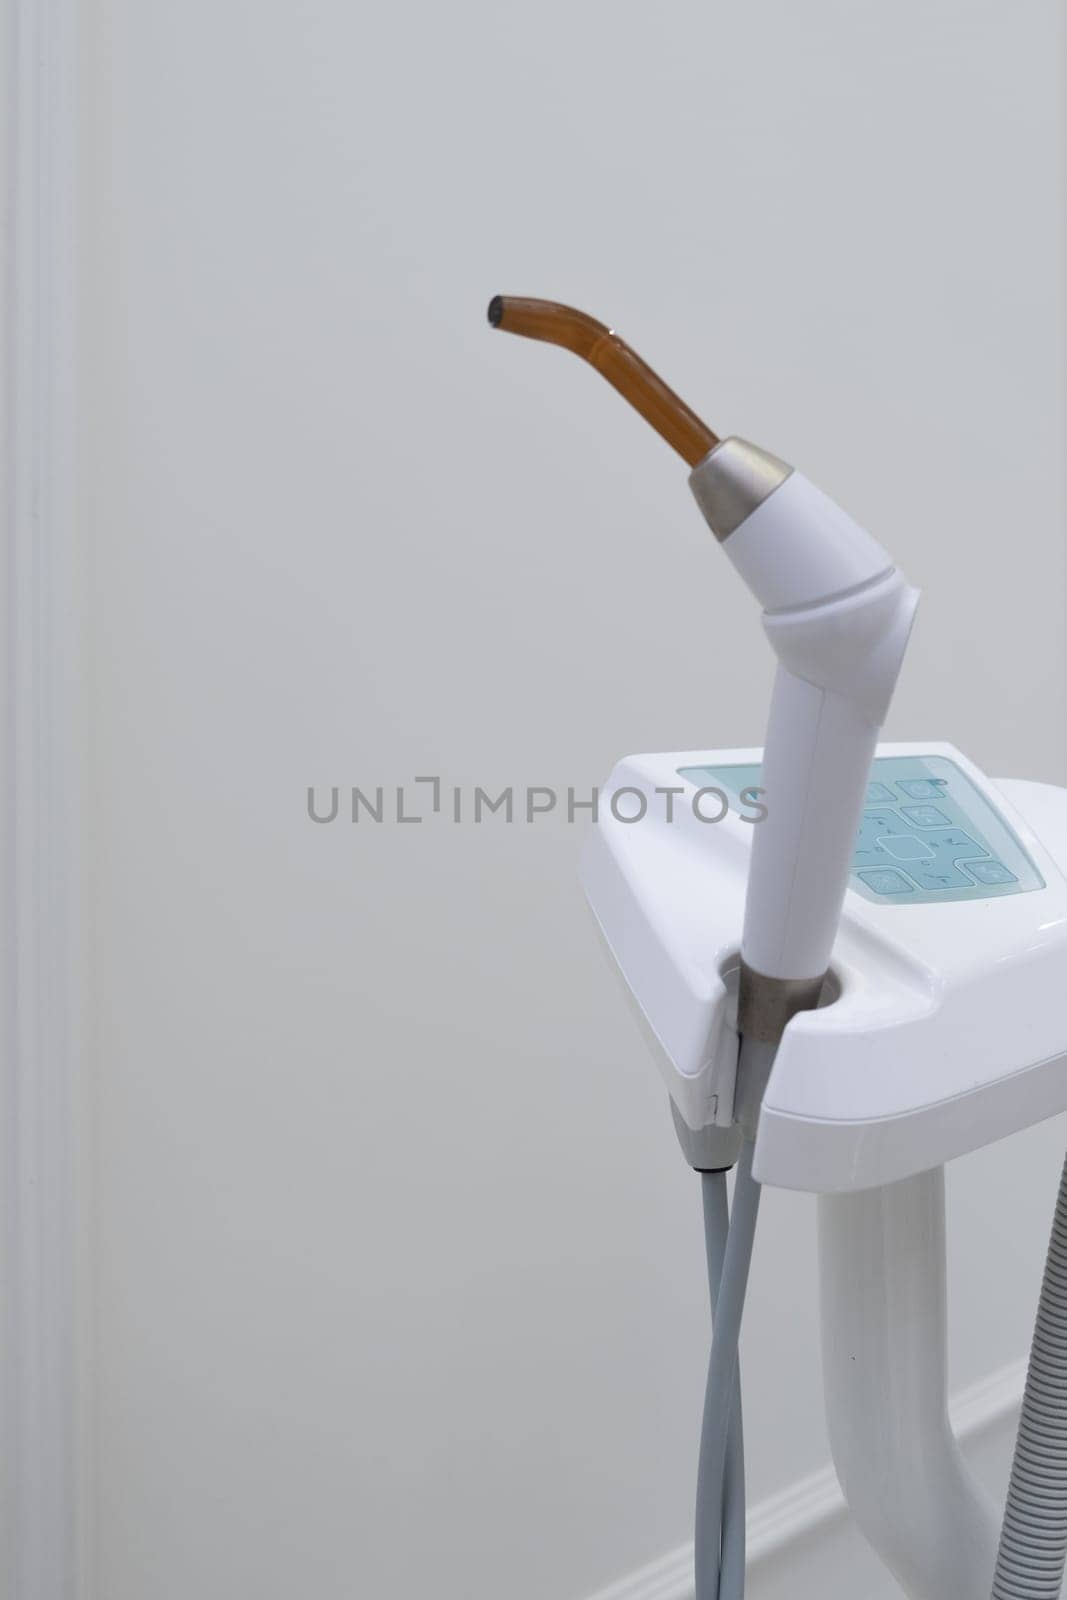 Dental UV curing lamp for polymerization of dental materials by danjelaruci